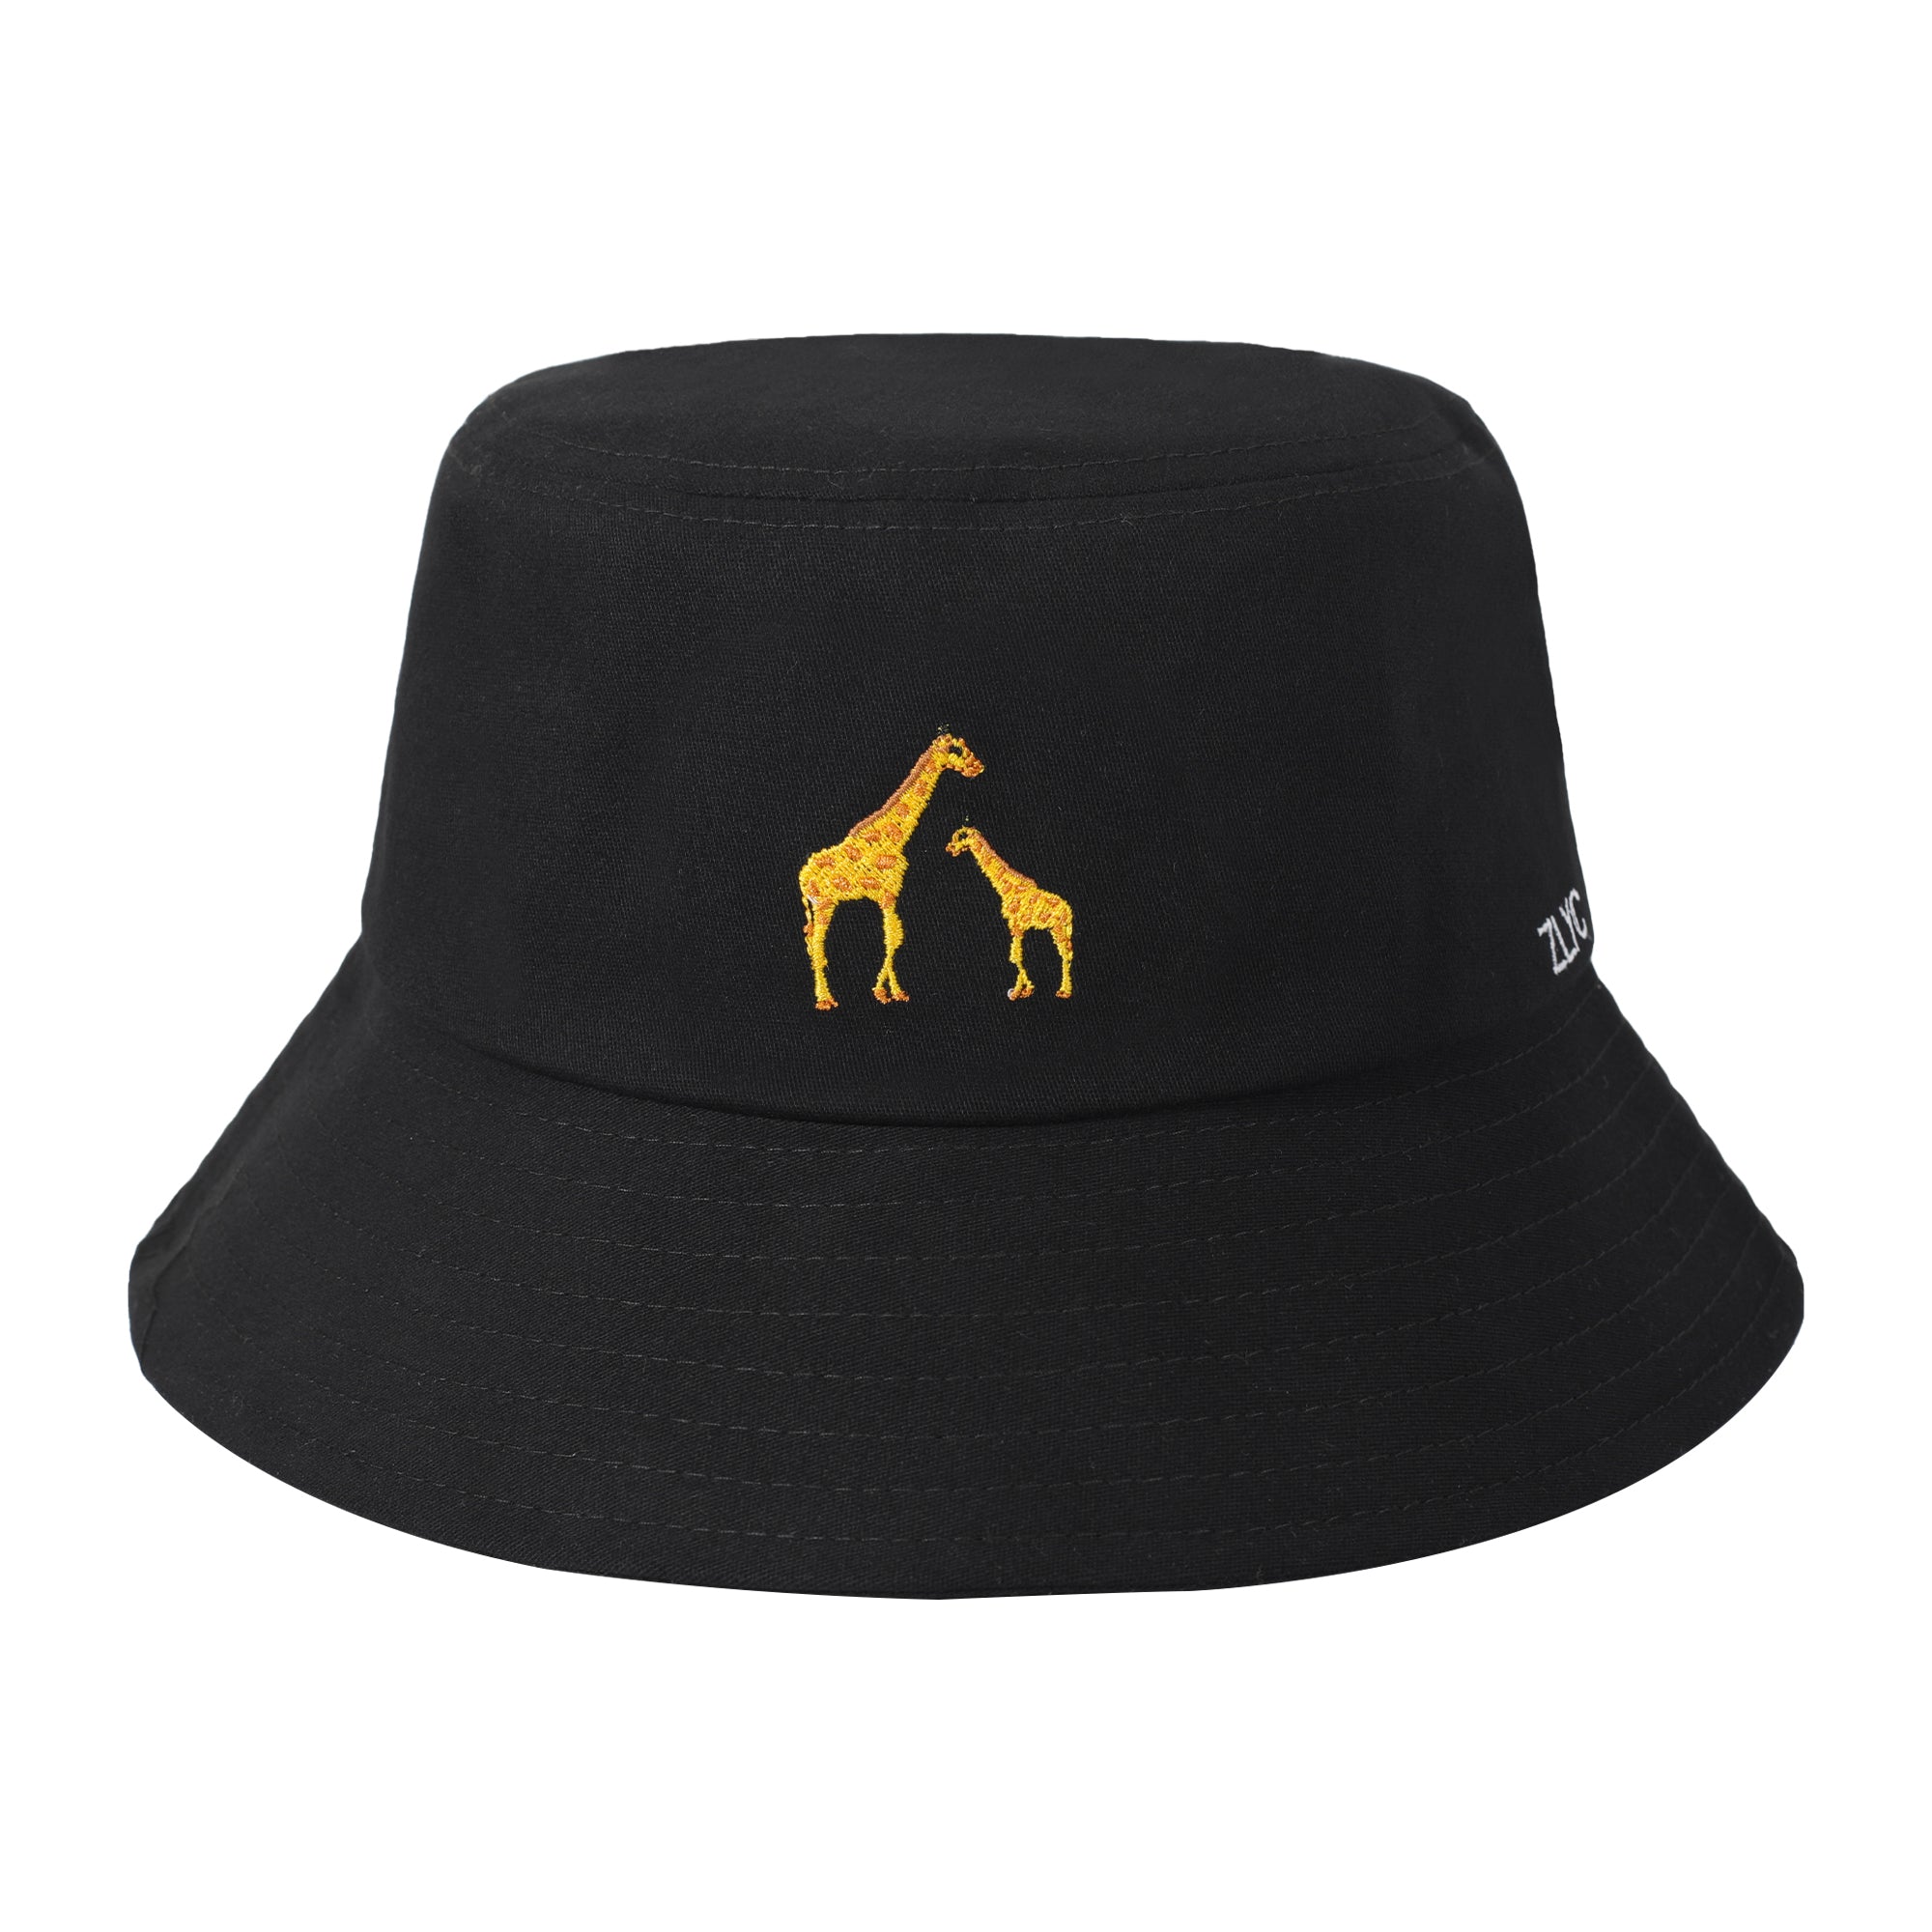 Embroidered Giraffe Bucket Hat